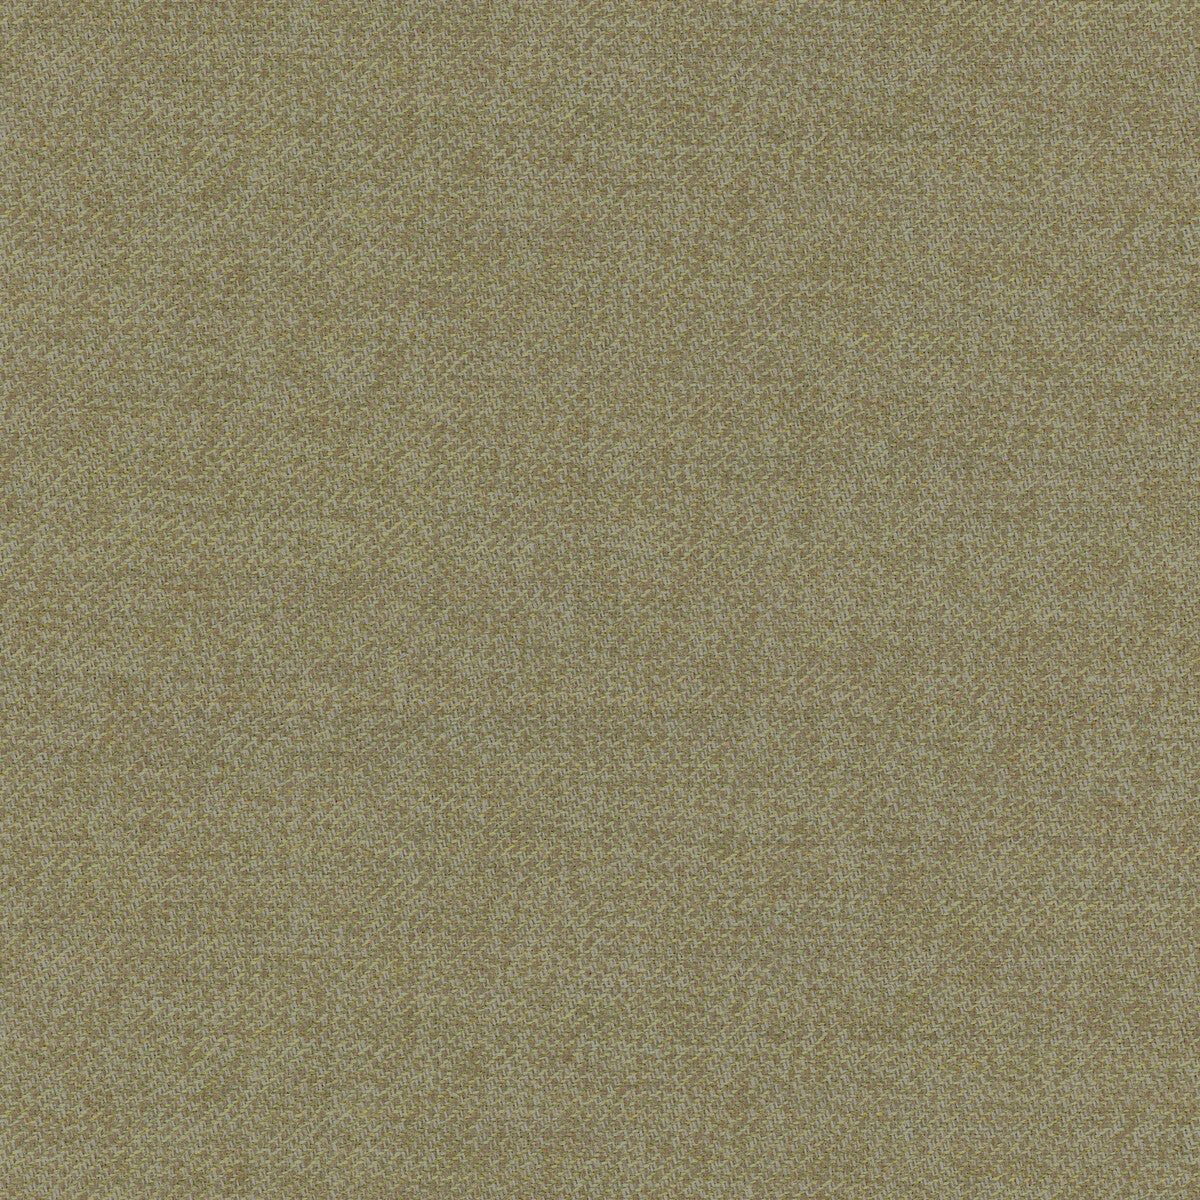 Quartzite Wool fabric in tarragon color - pattern 2017120.63.0 - by Lee Jofa